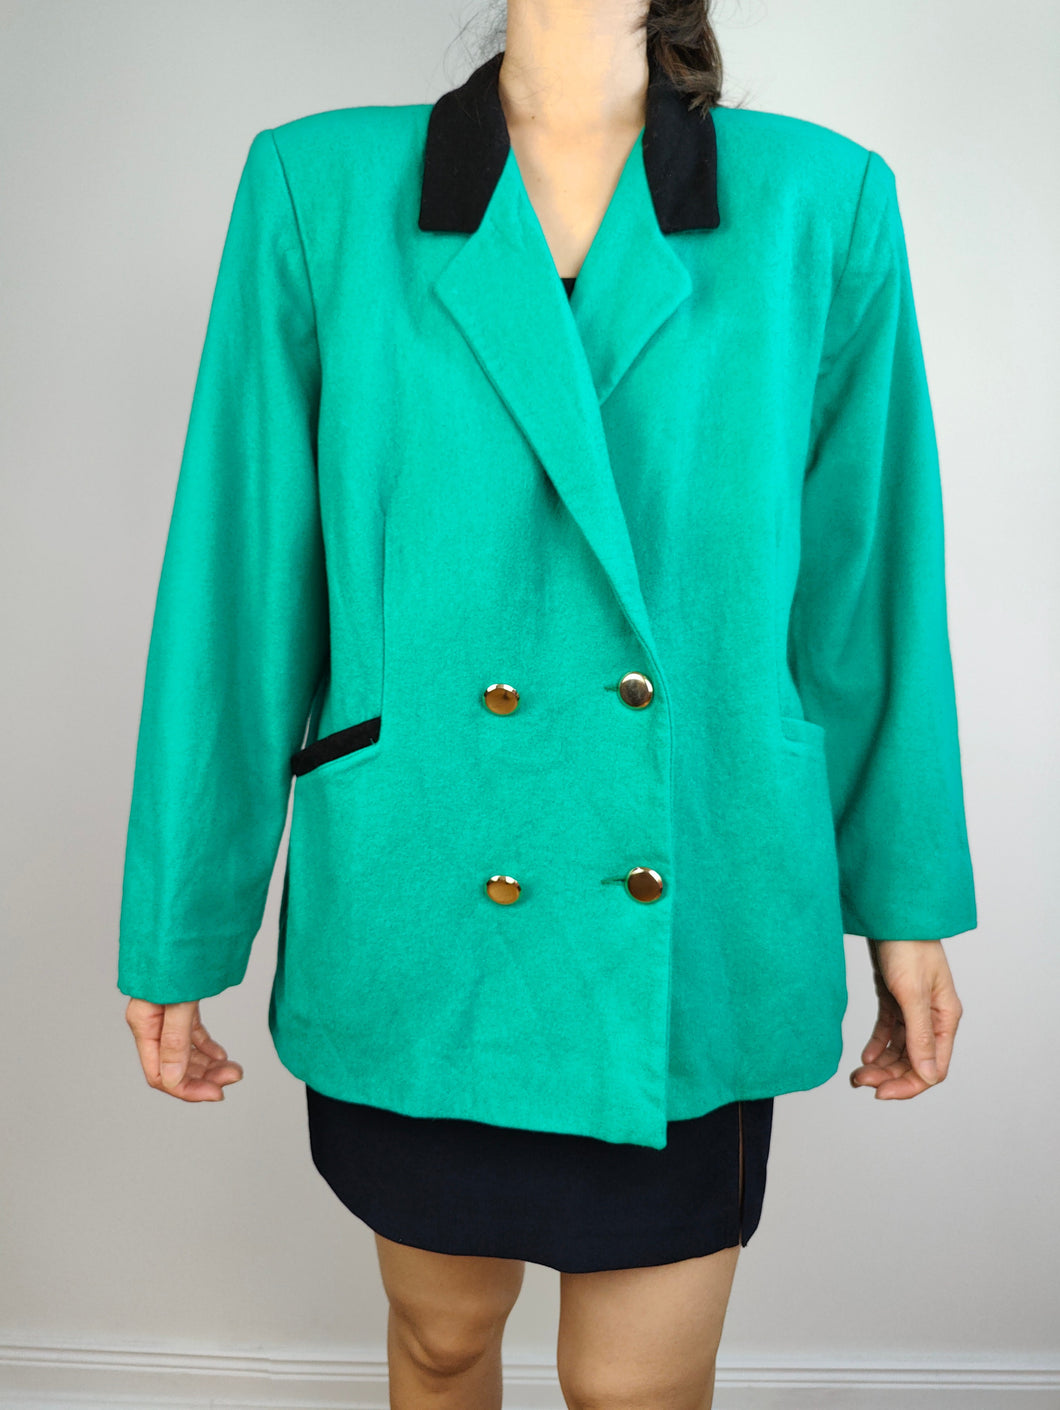 The Turquoise Blazer | Vintage wool turquoise green plain blazer jacket S-M